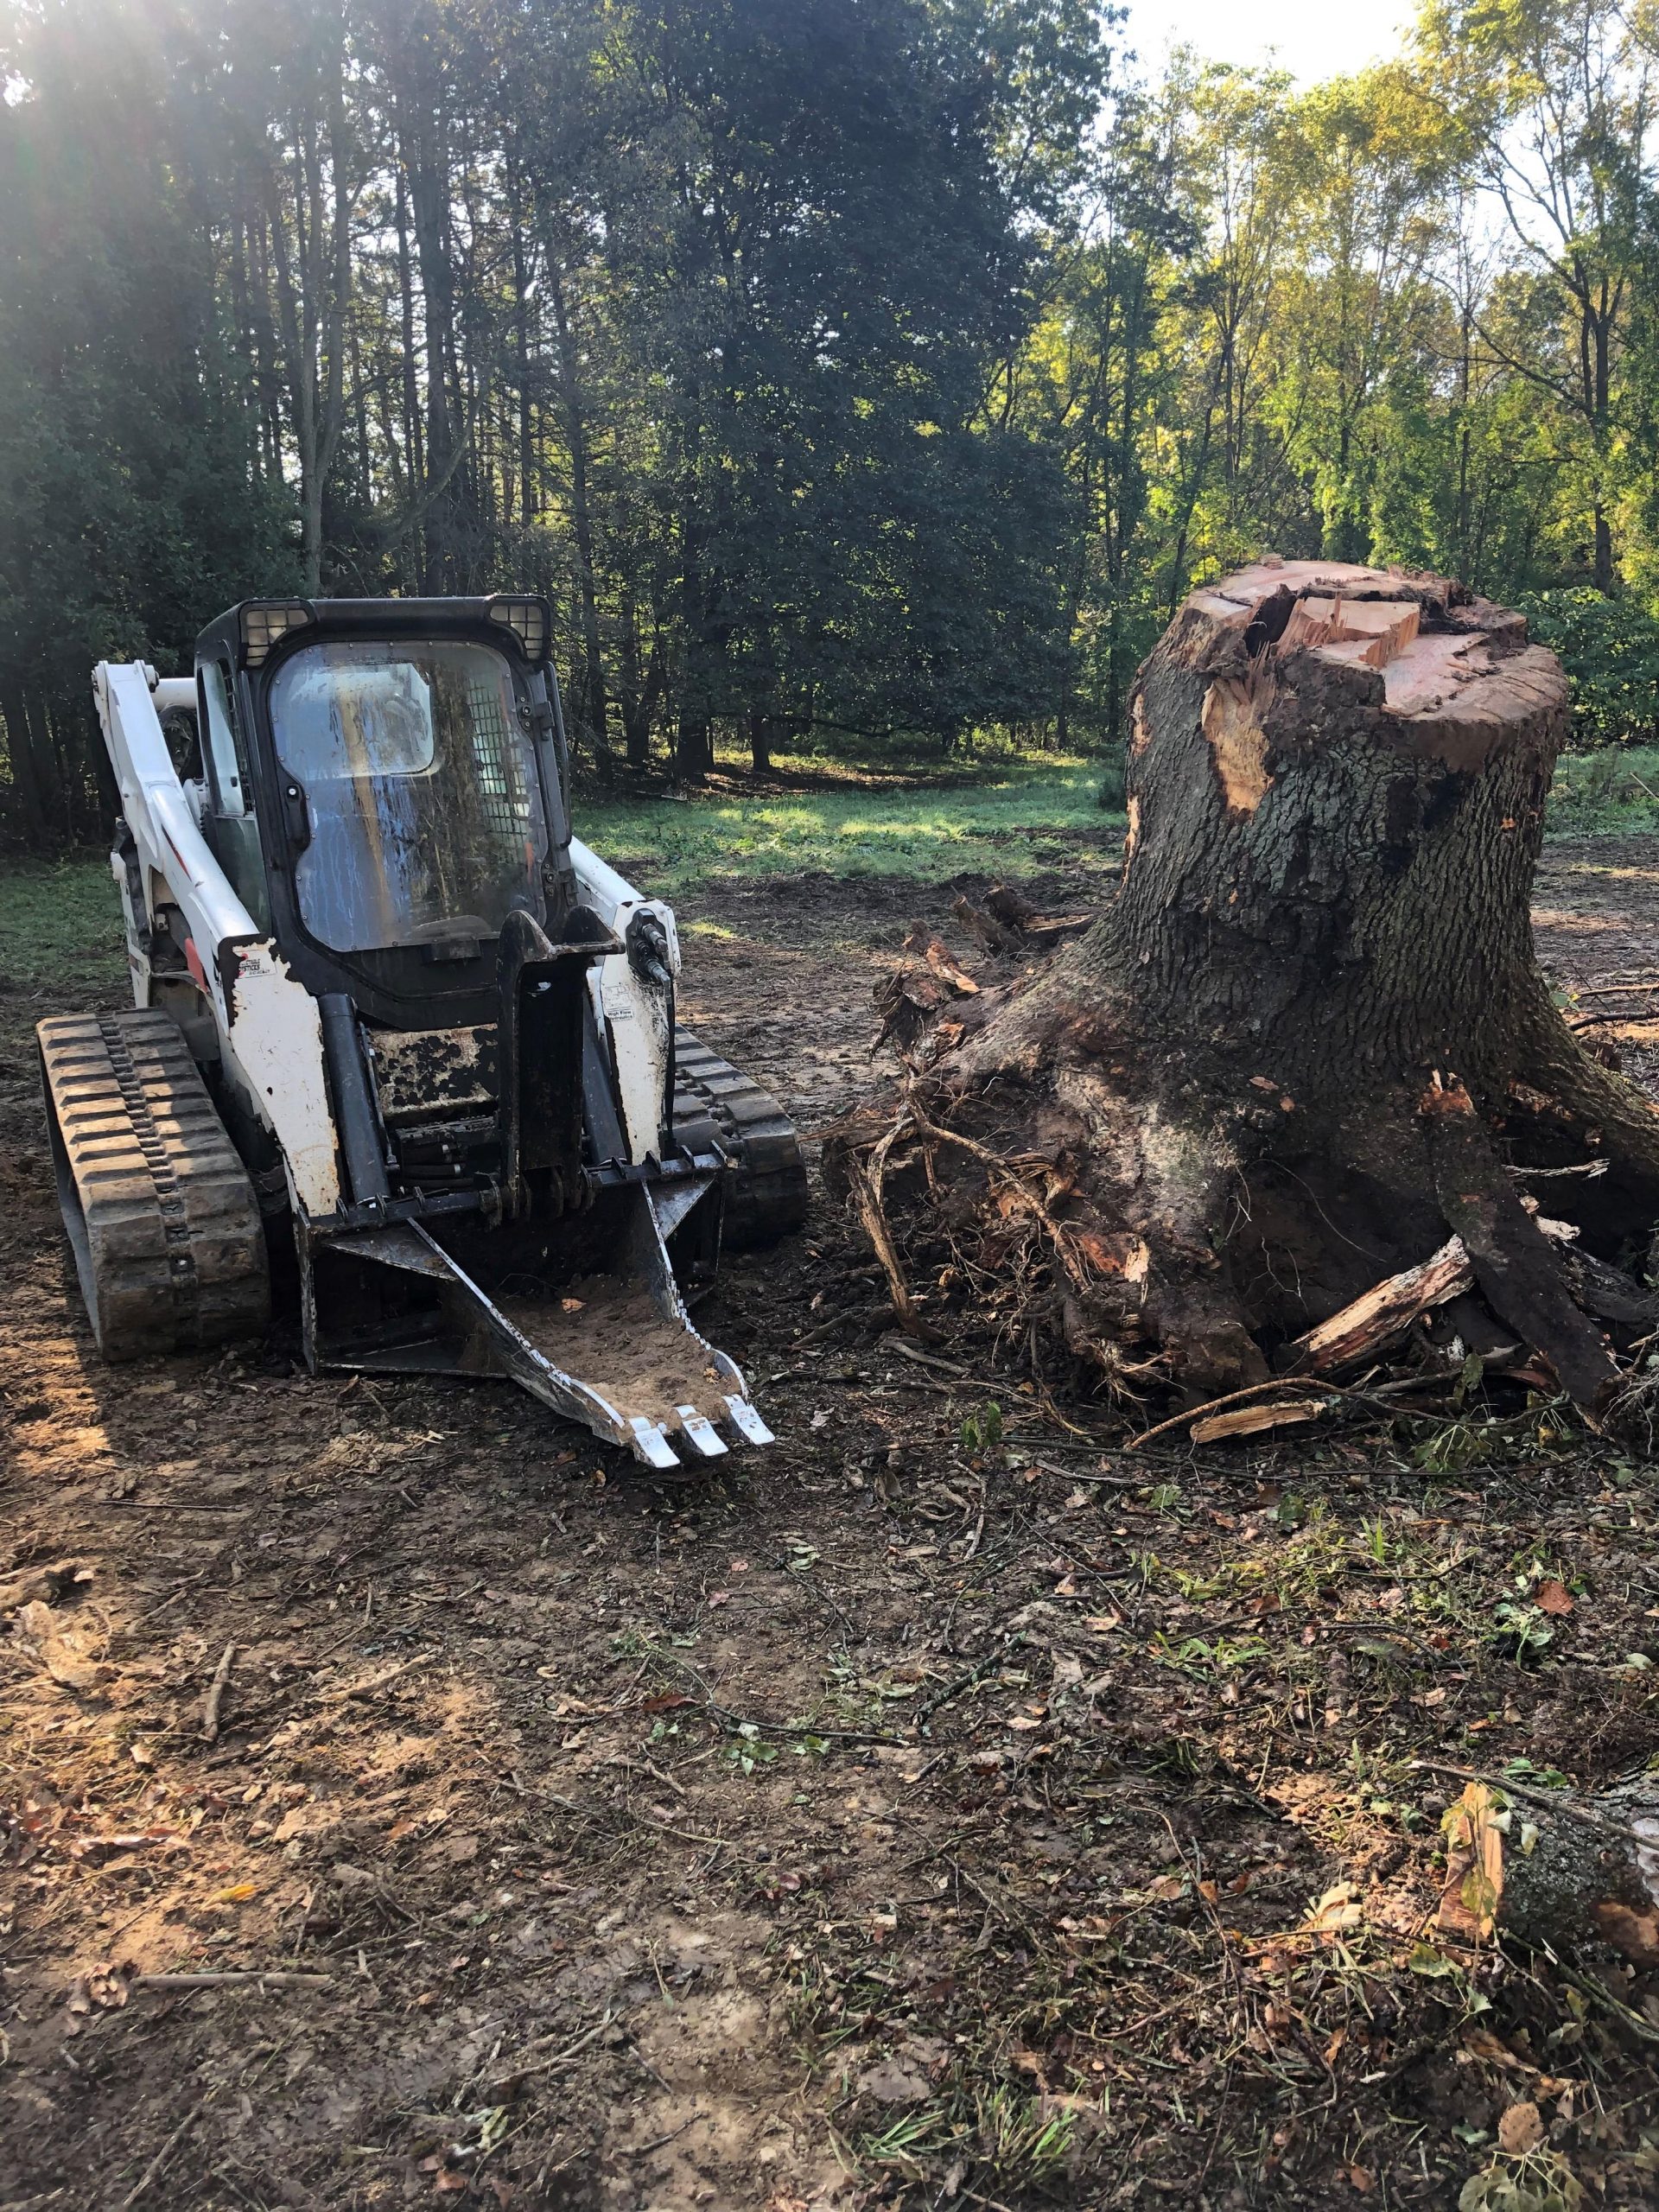 Narrow Skid Steer Tree Stump Removal Bucket